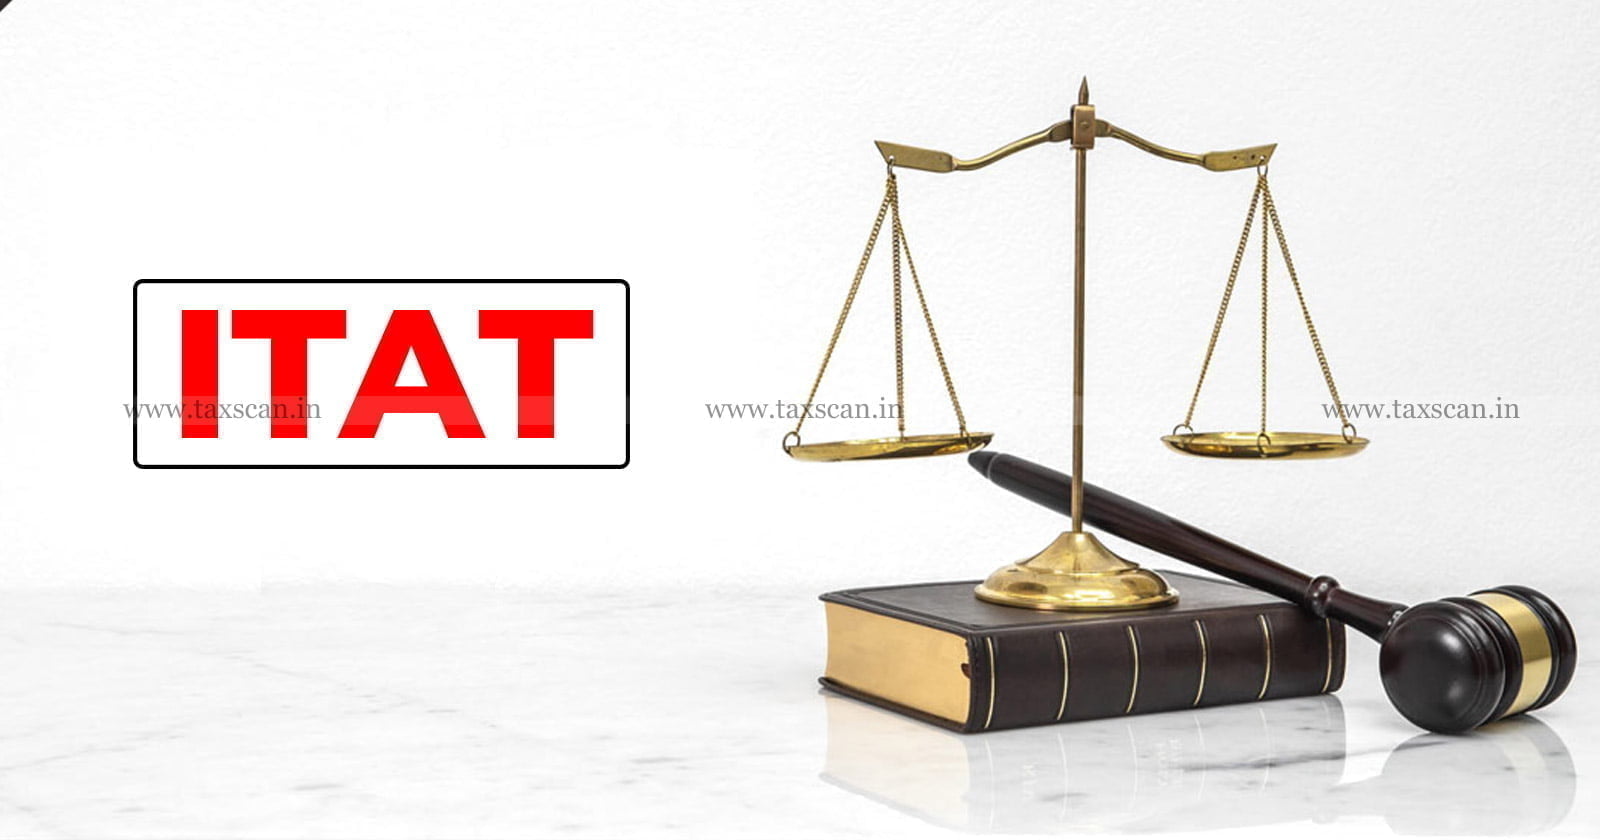 ITAT - AO - Government Valuer's Fair Market Valuation Report - Piramal Enterprises - taxscan